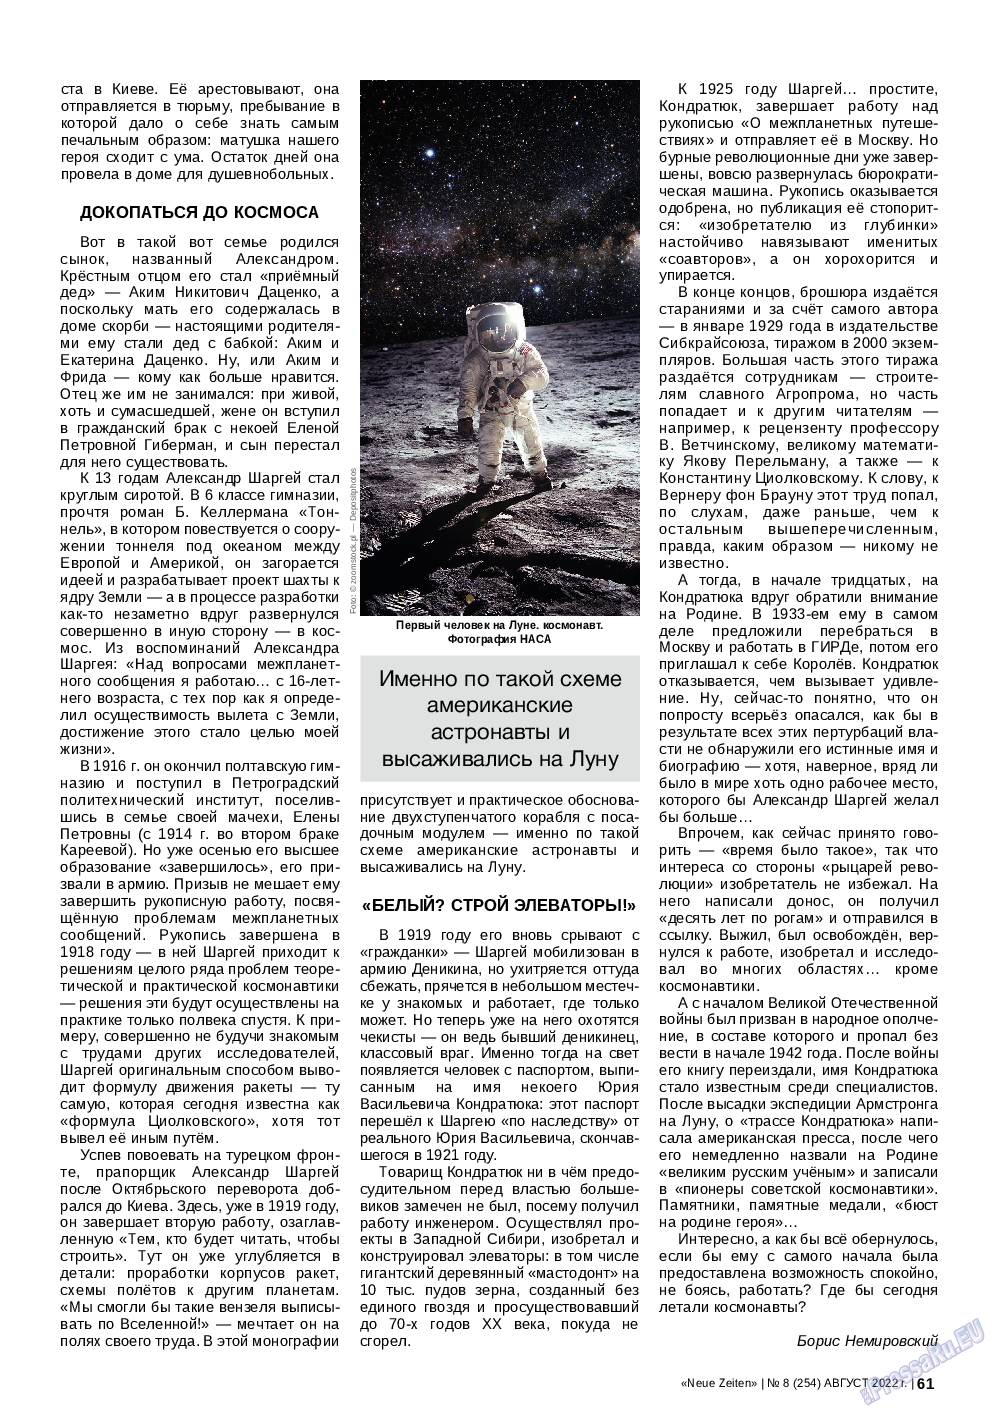 Neue Zeiten (журнал). 2022 год, номер 8, стр. 61